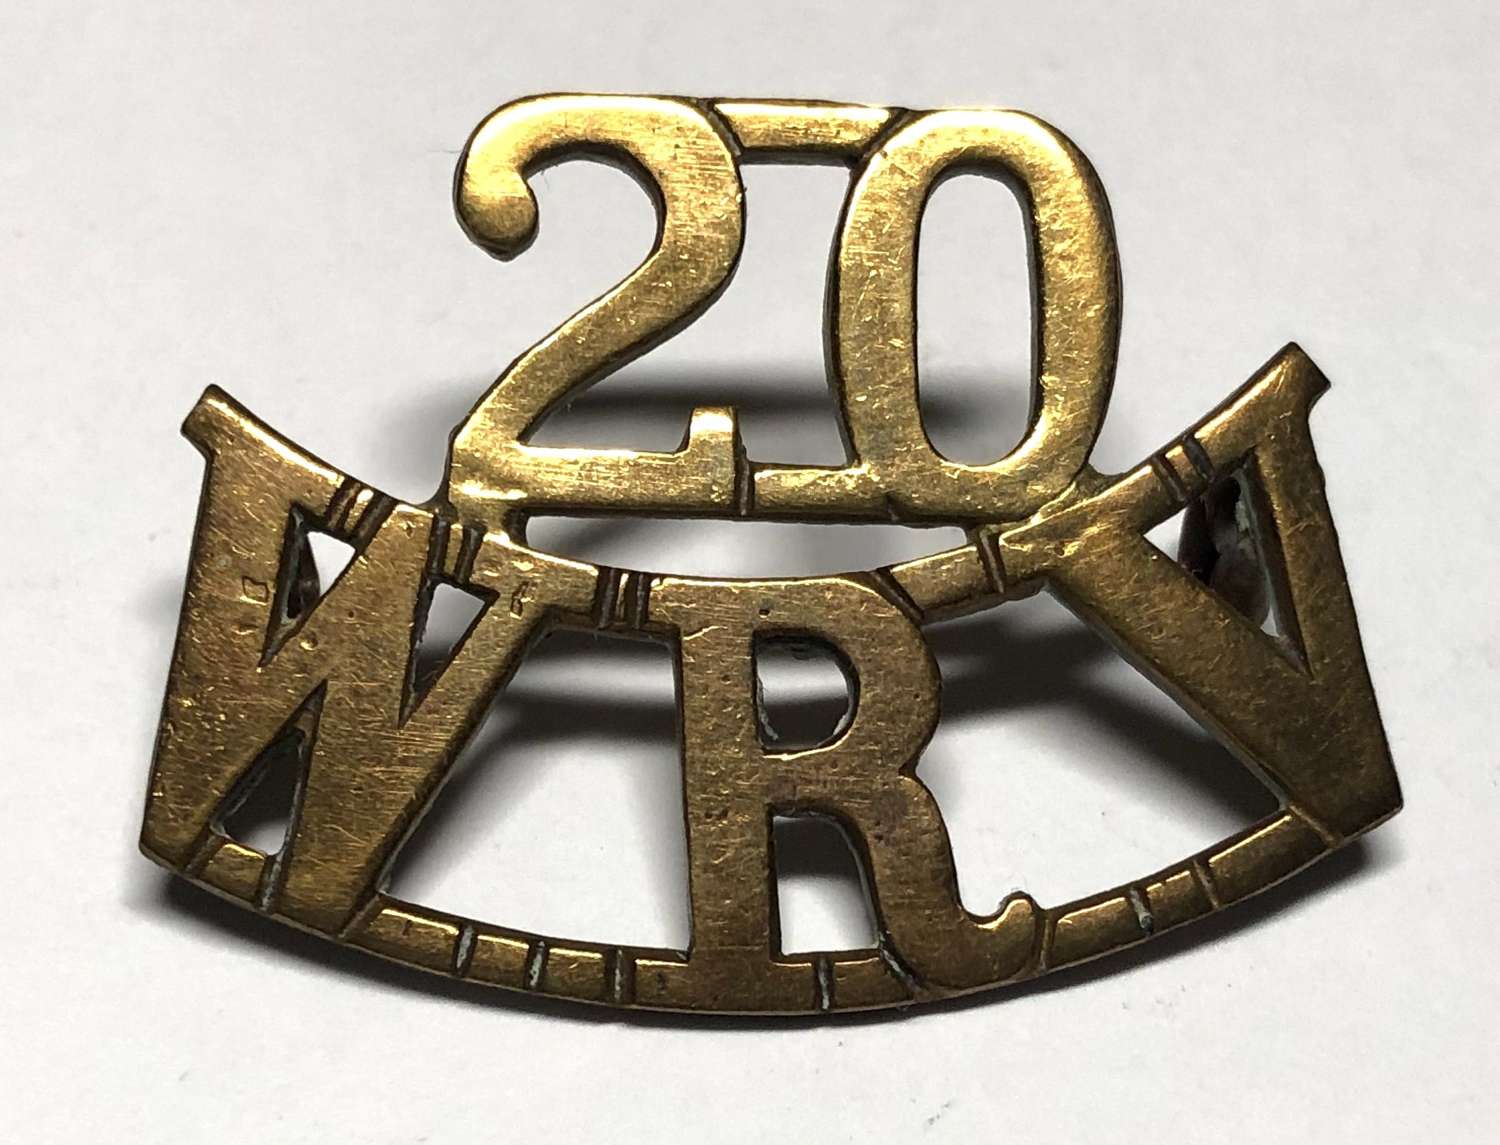 20 / WRV  WW1 West Riding Volunteers VTC brass shoulder title